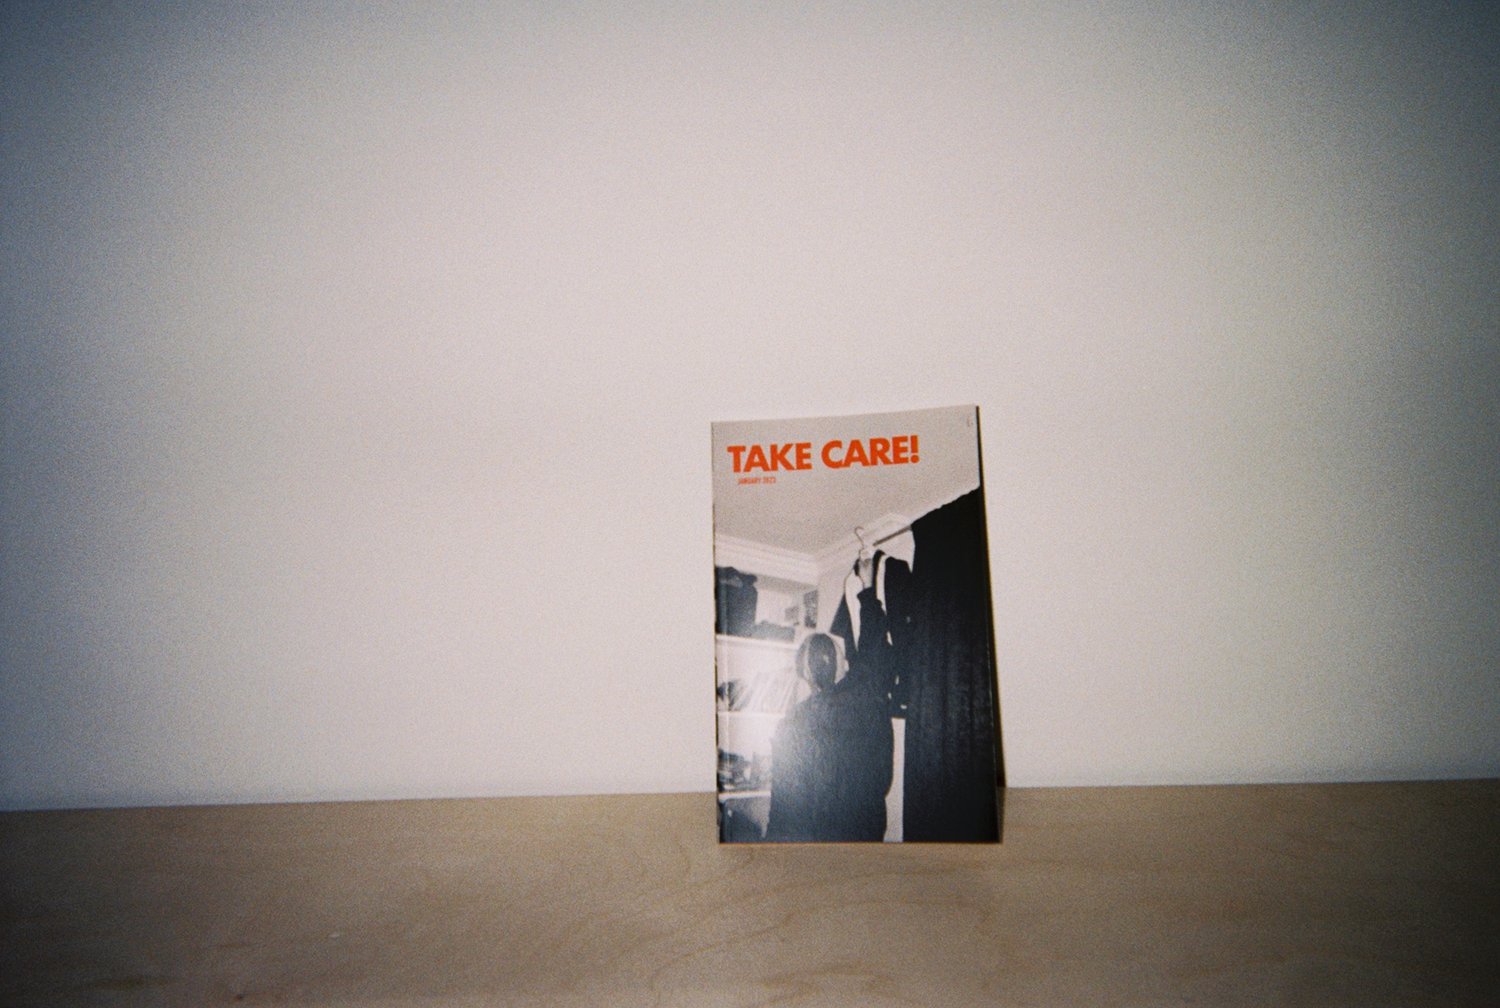 TAKE CARE!